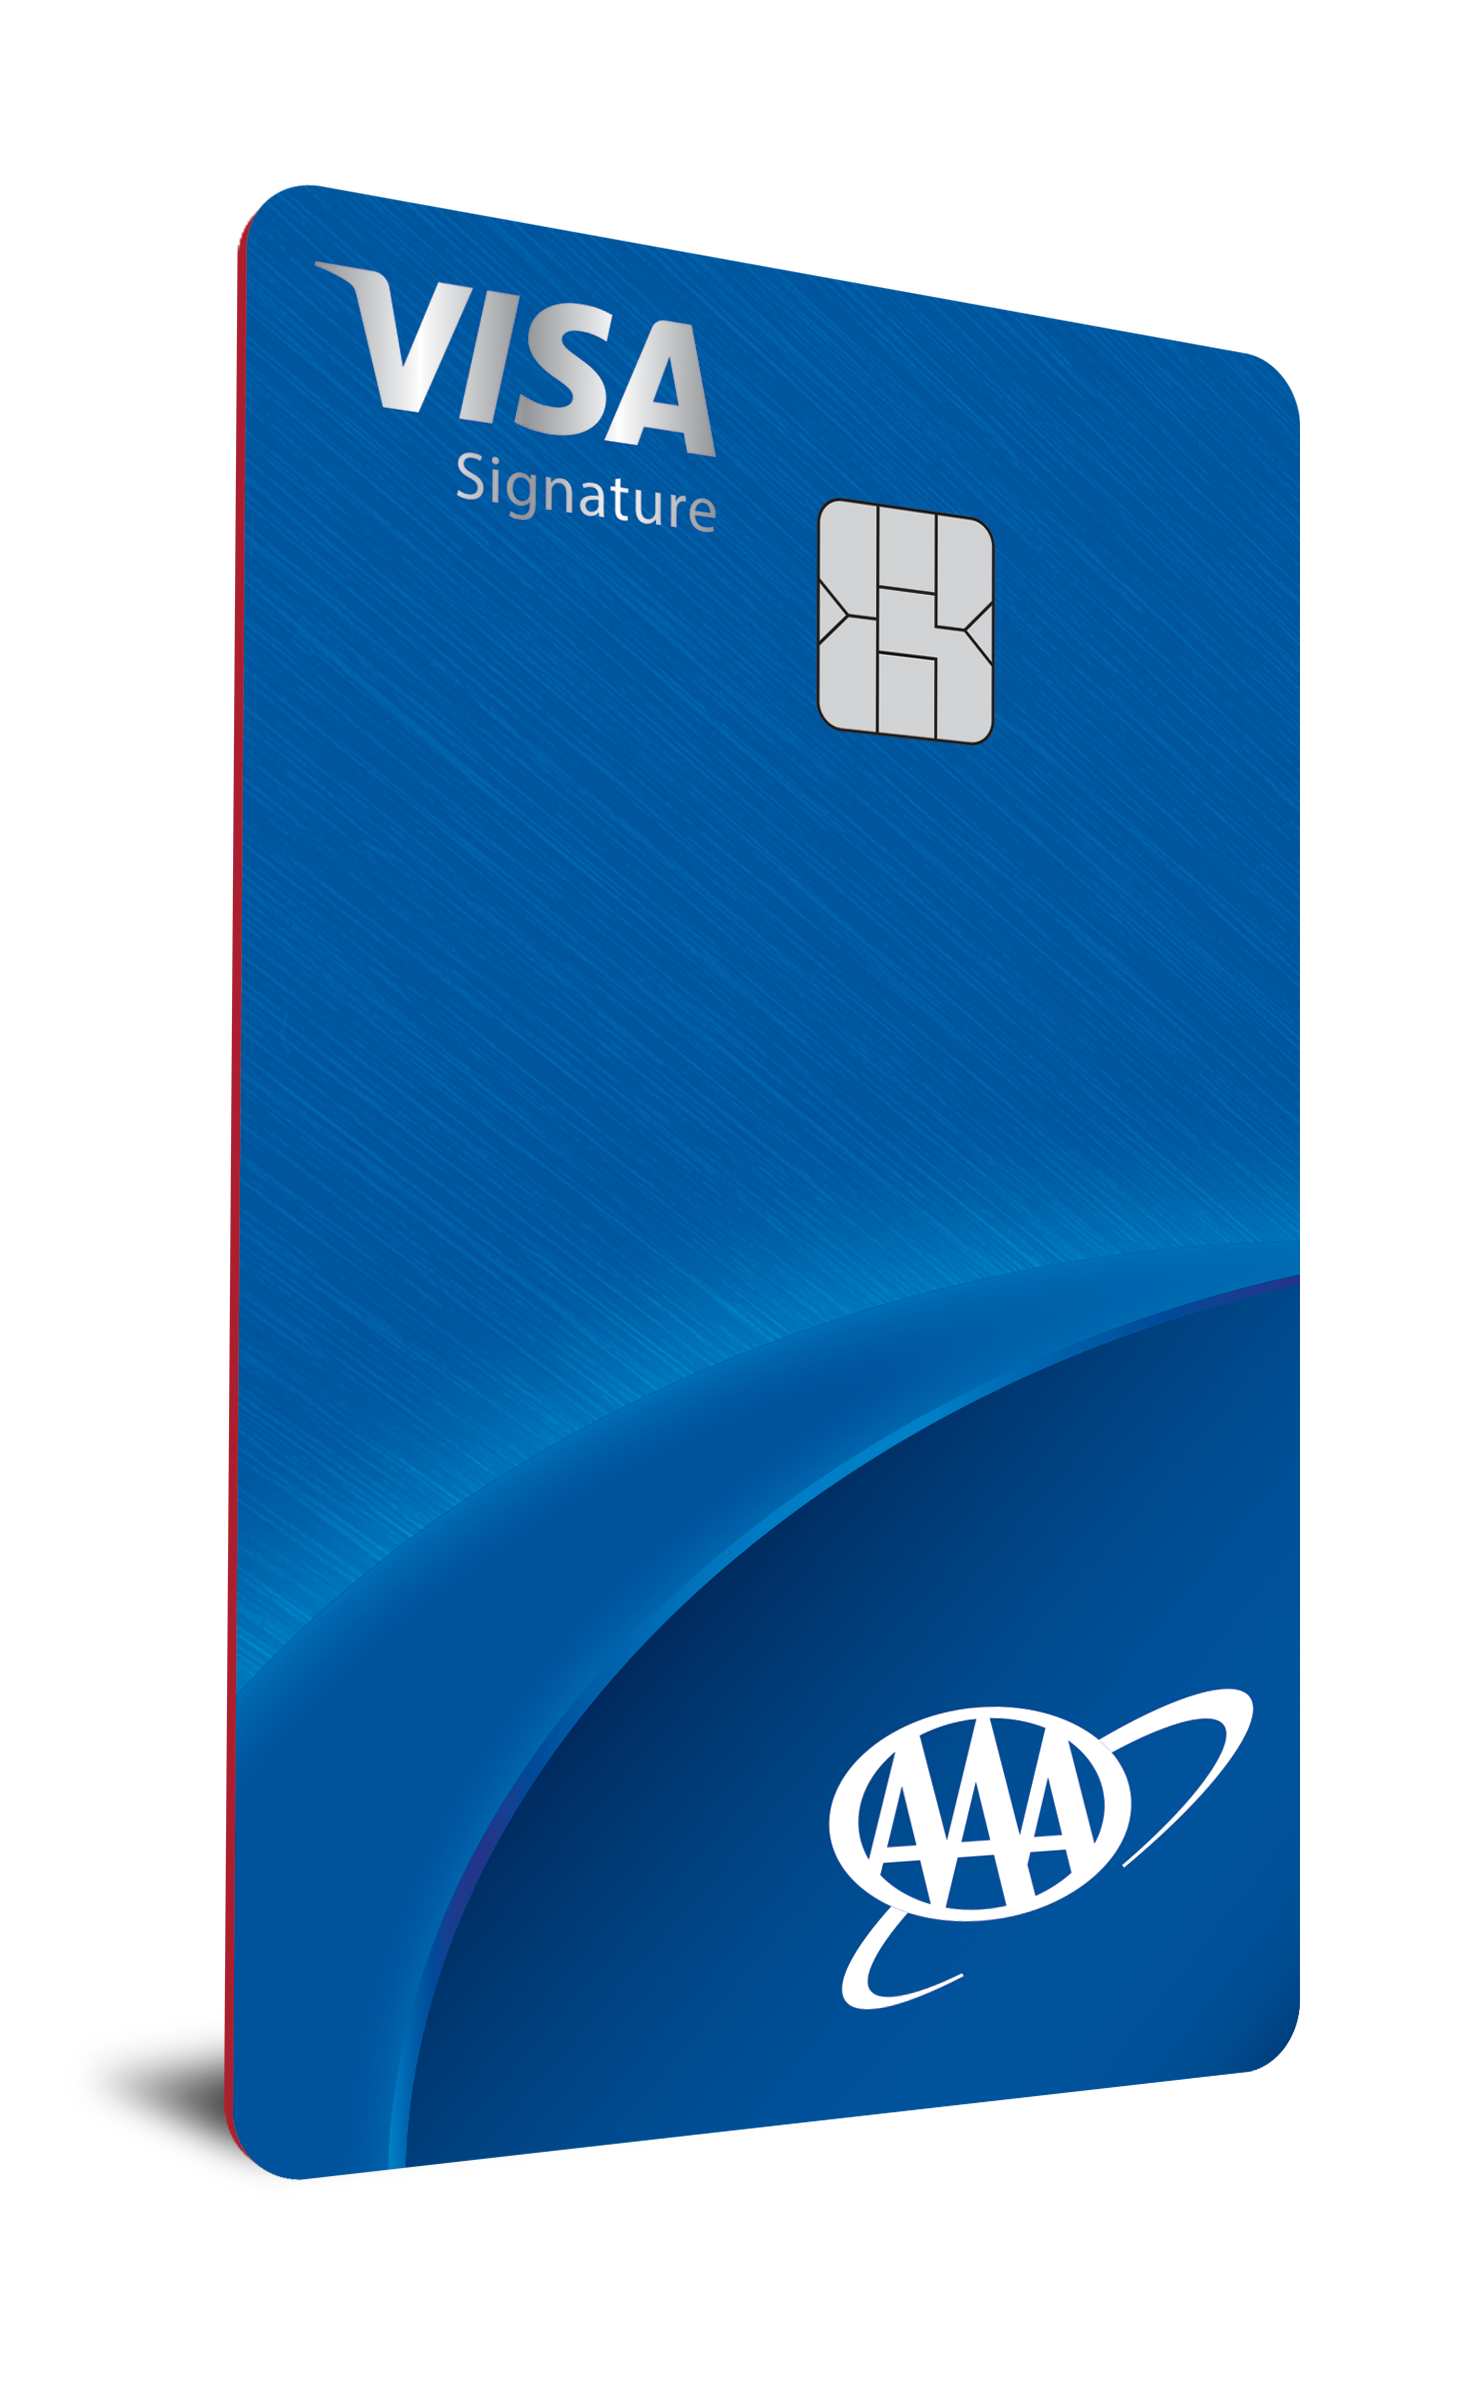 Aaa advantage Activate Login Account AAA Visa Signature Credit 